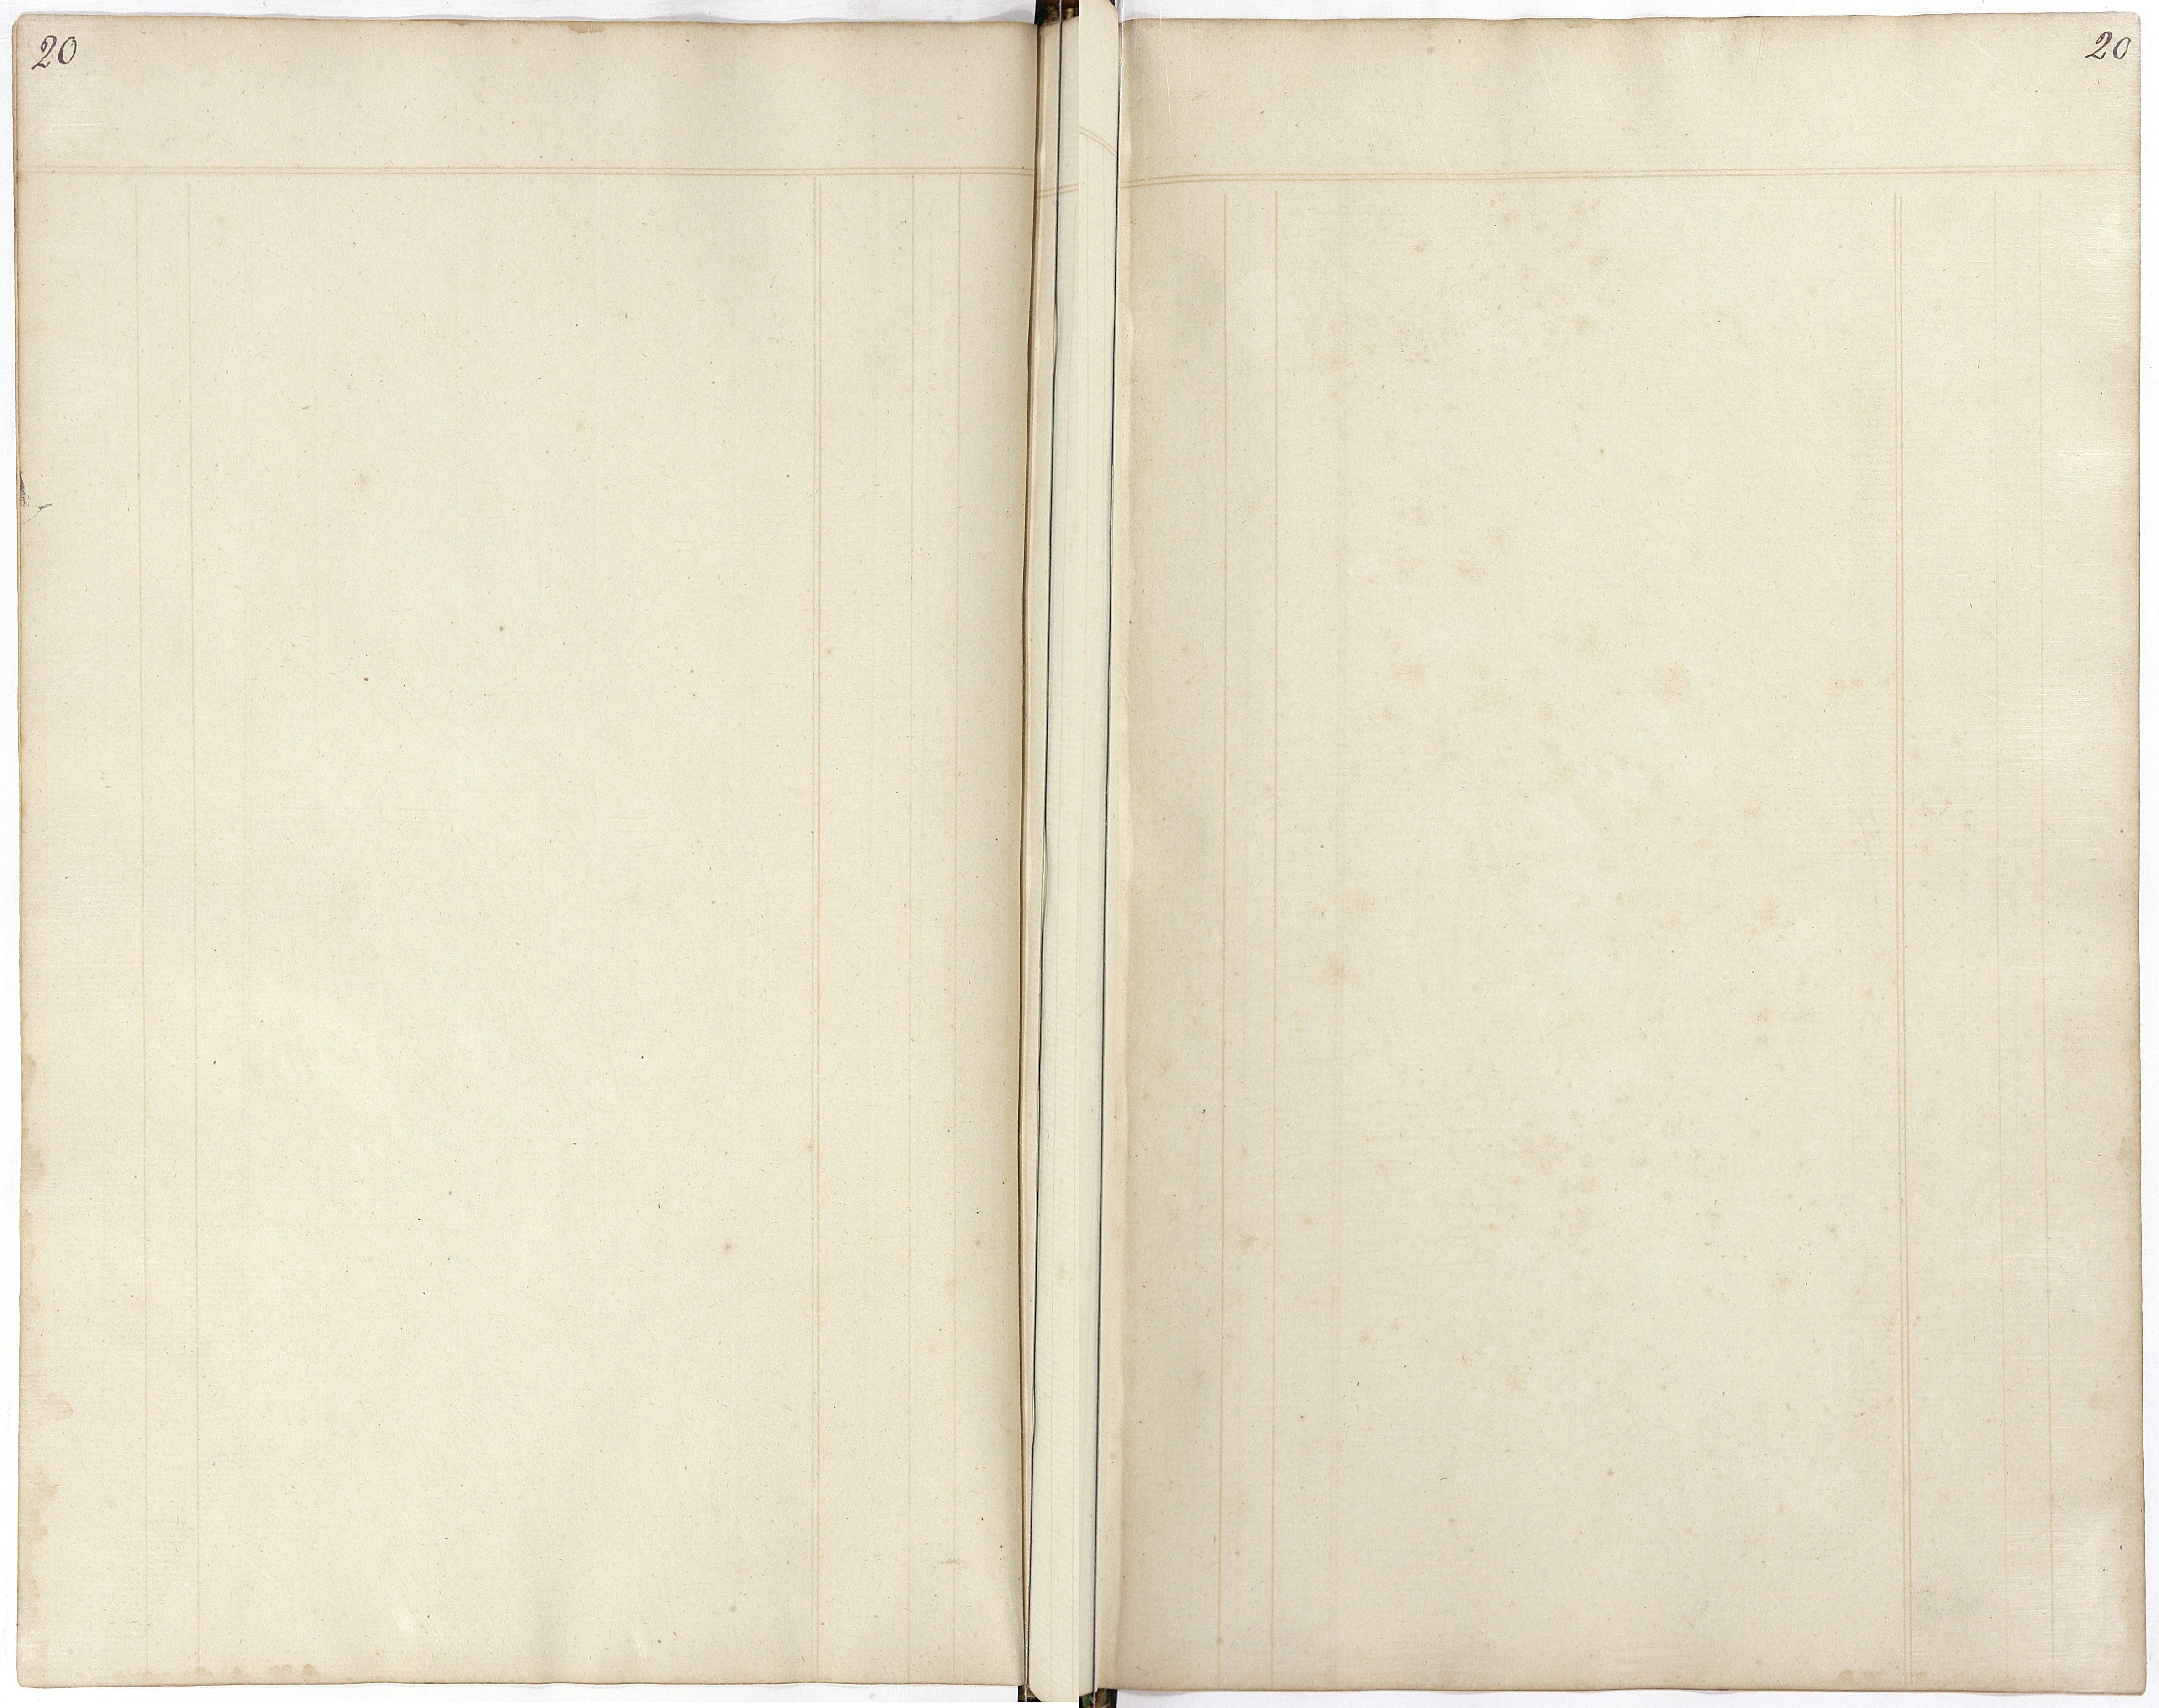 Image of Folio 20 (transcription below)